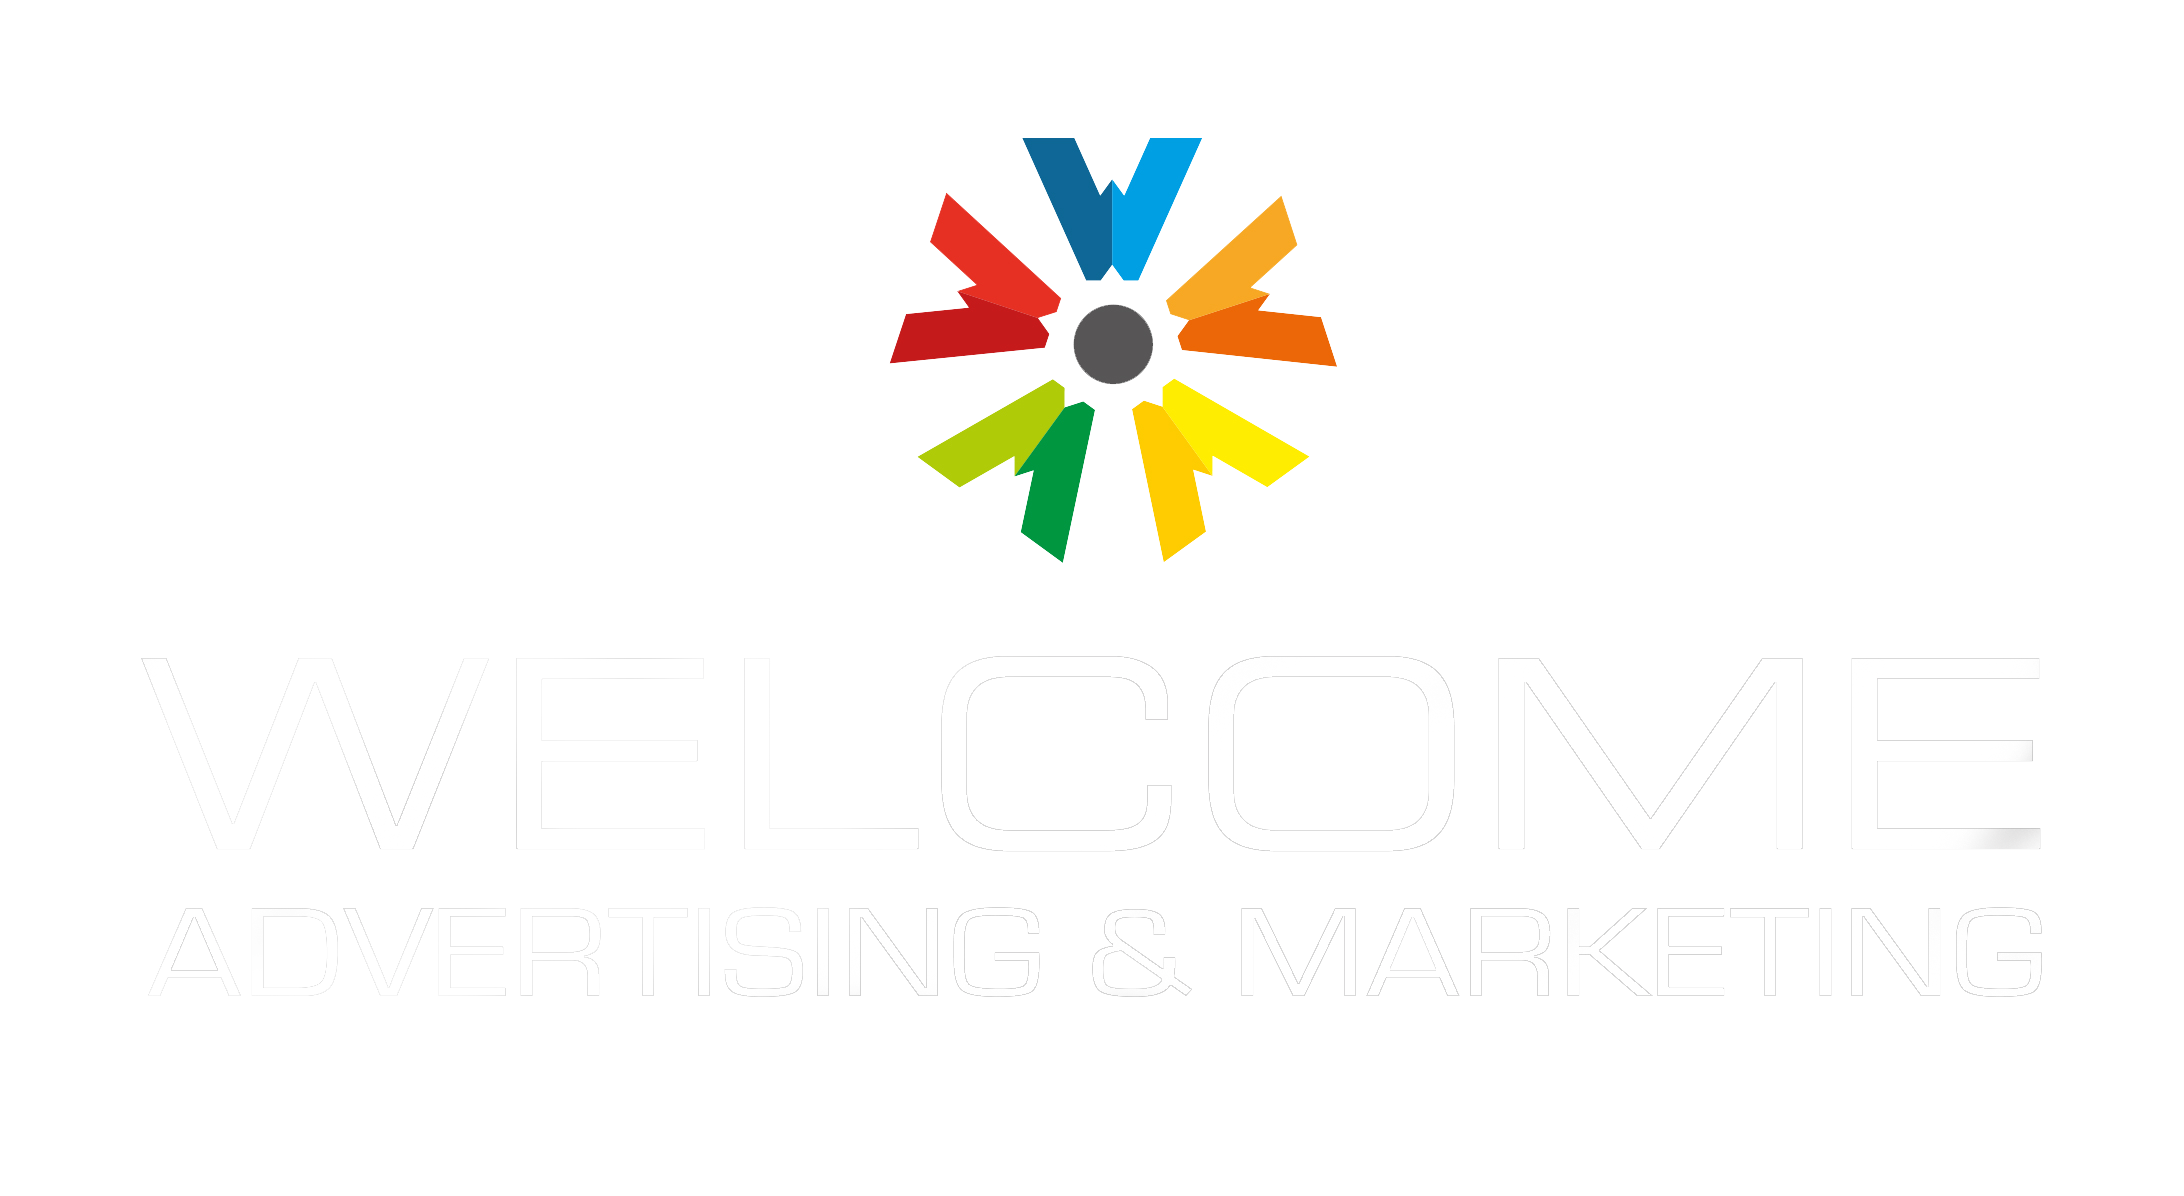 Welcome Adverstising & Marketing Pvt. Ltd.